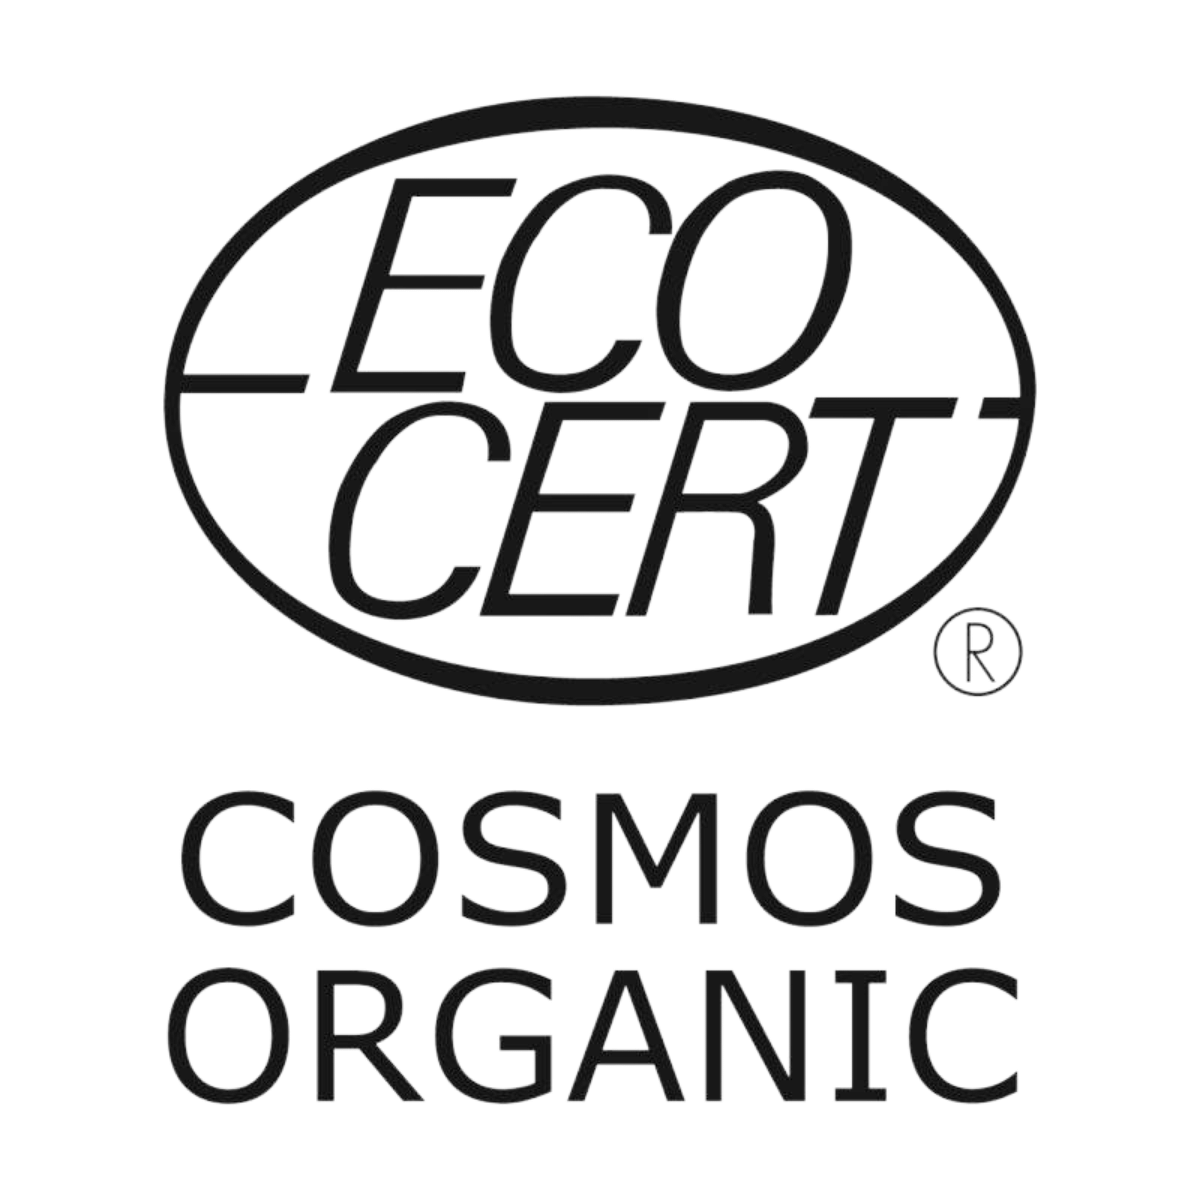 ecocert cosmos organic zertifizierte biokosmetik